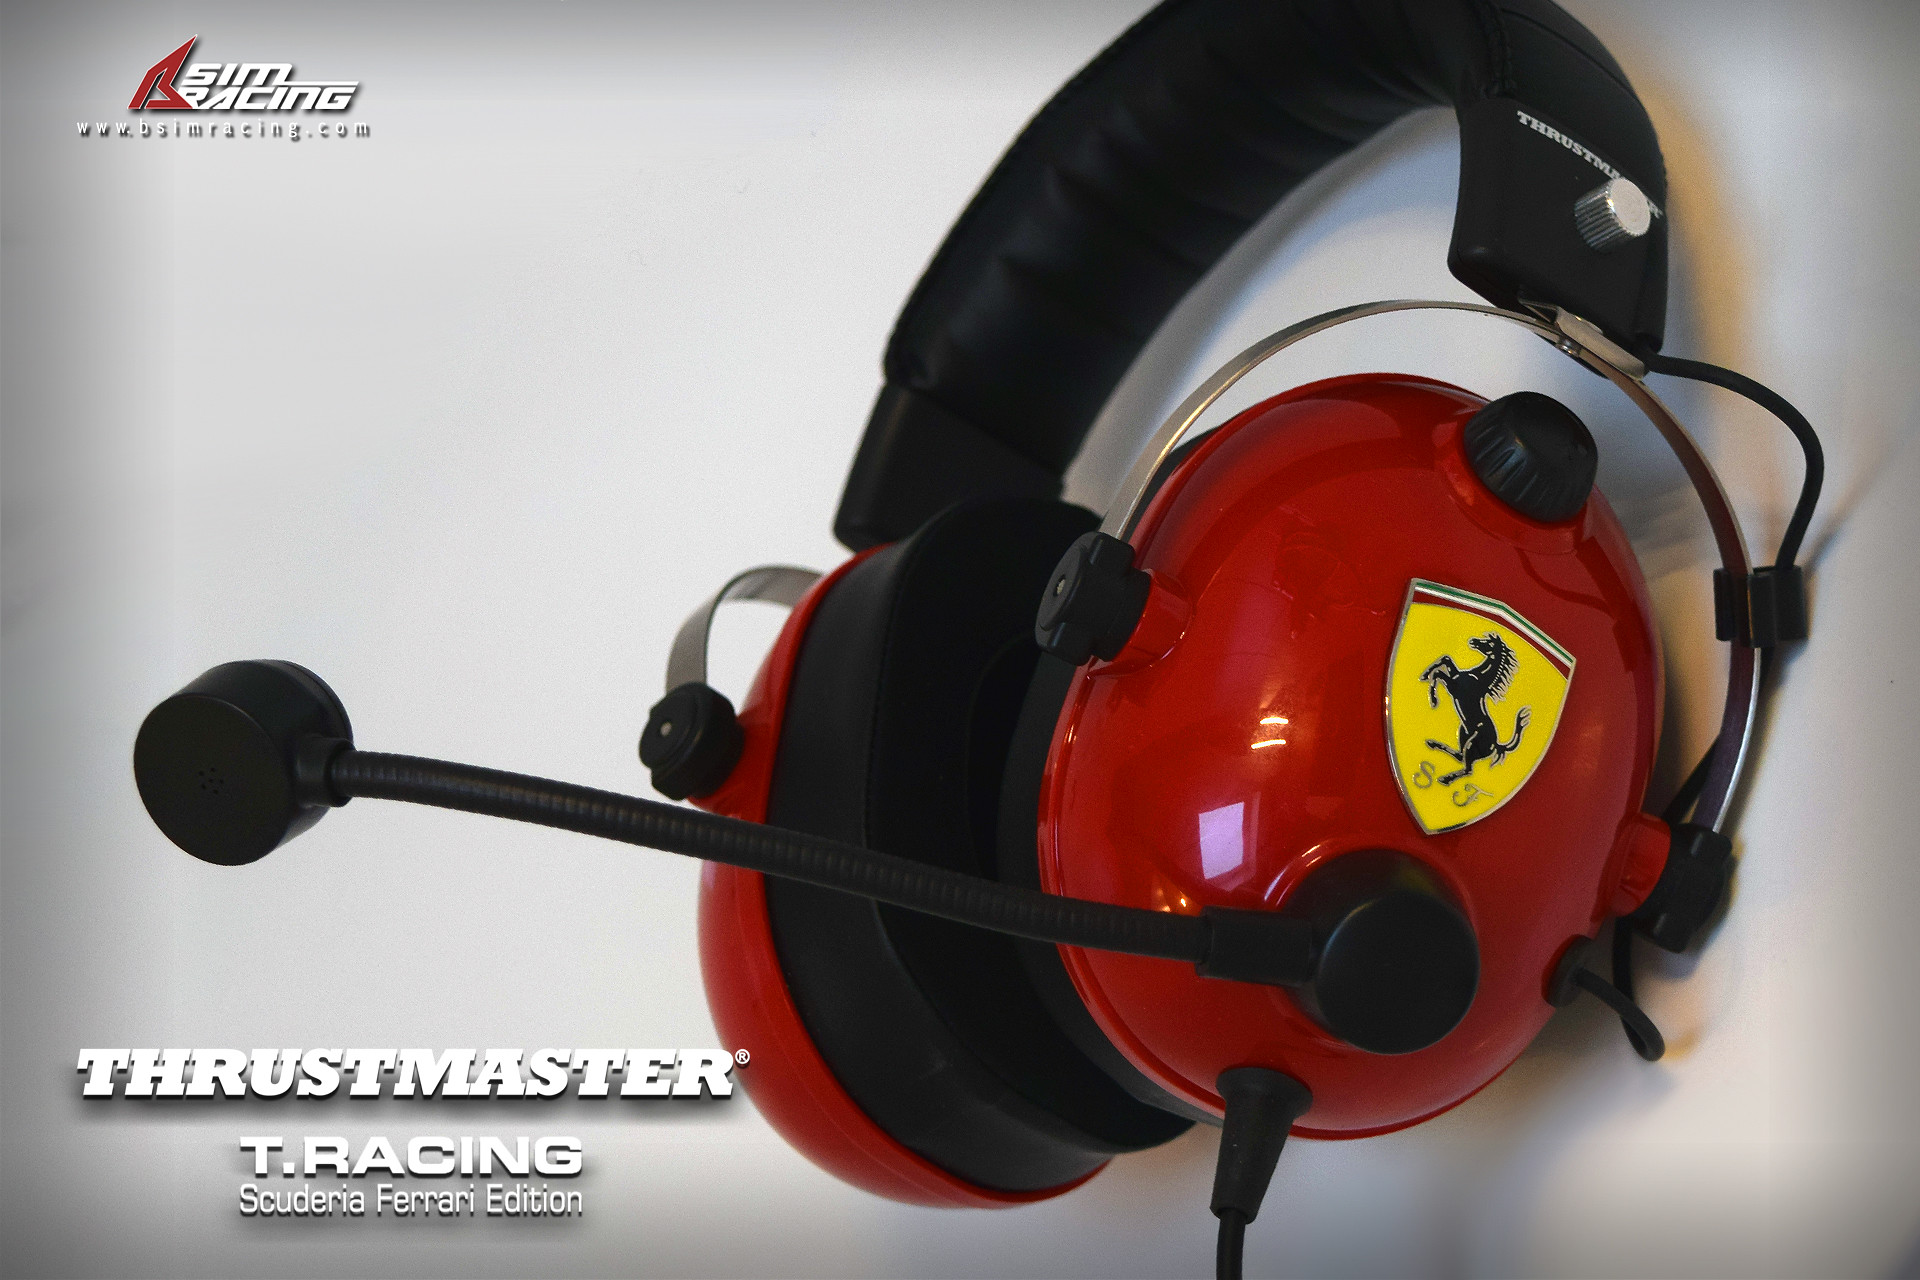 Thrustmaster T.Racing Scuderia Ferrari Review Bsimracing Edition Headset 